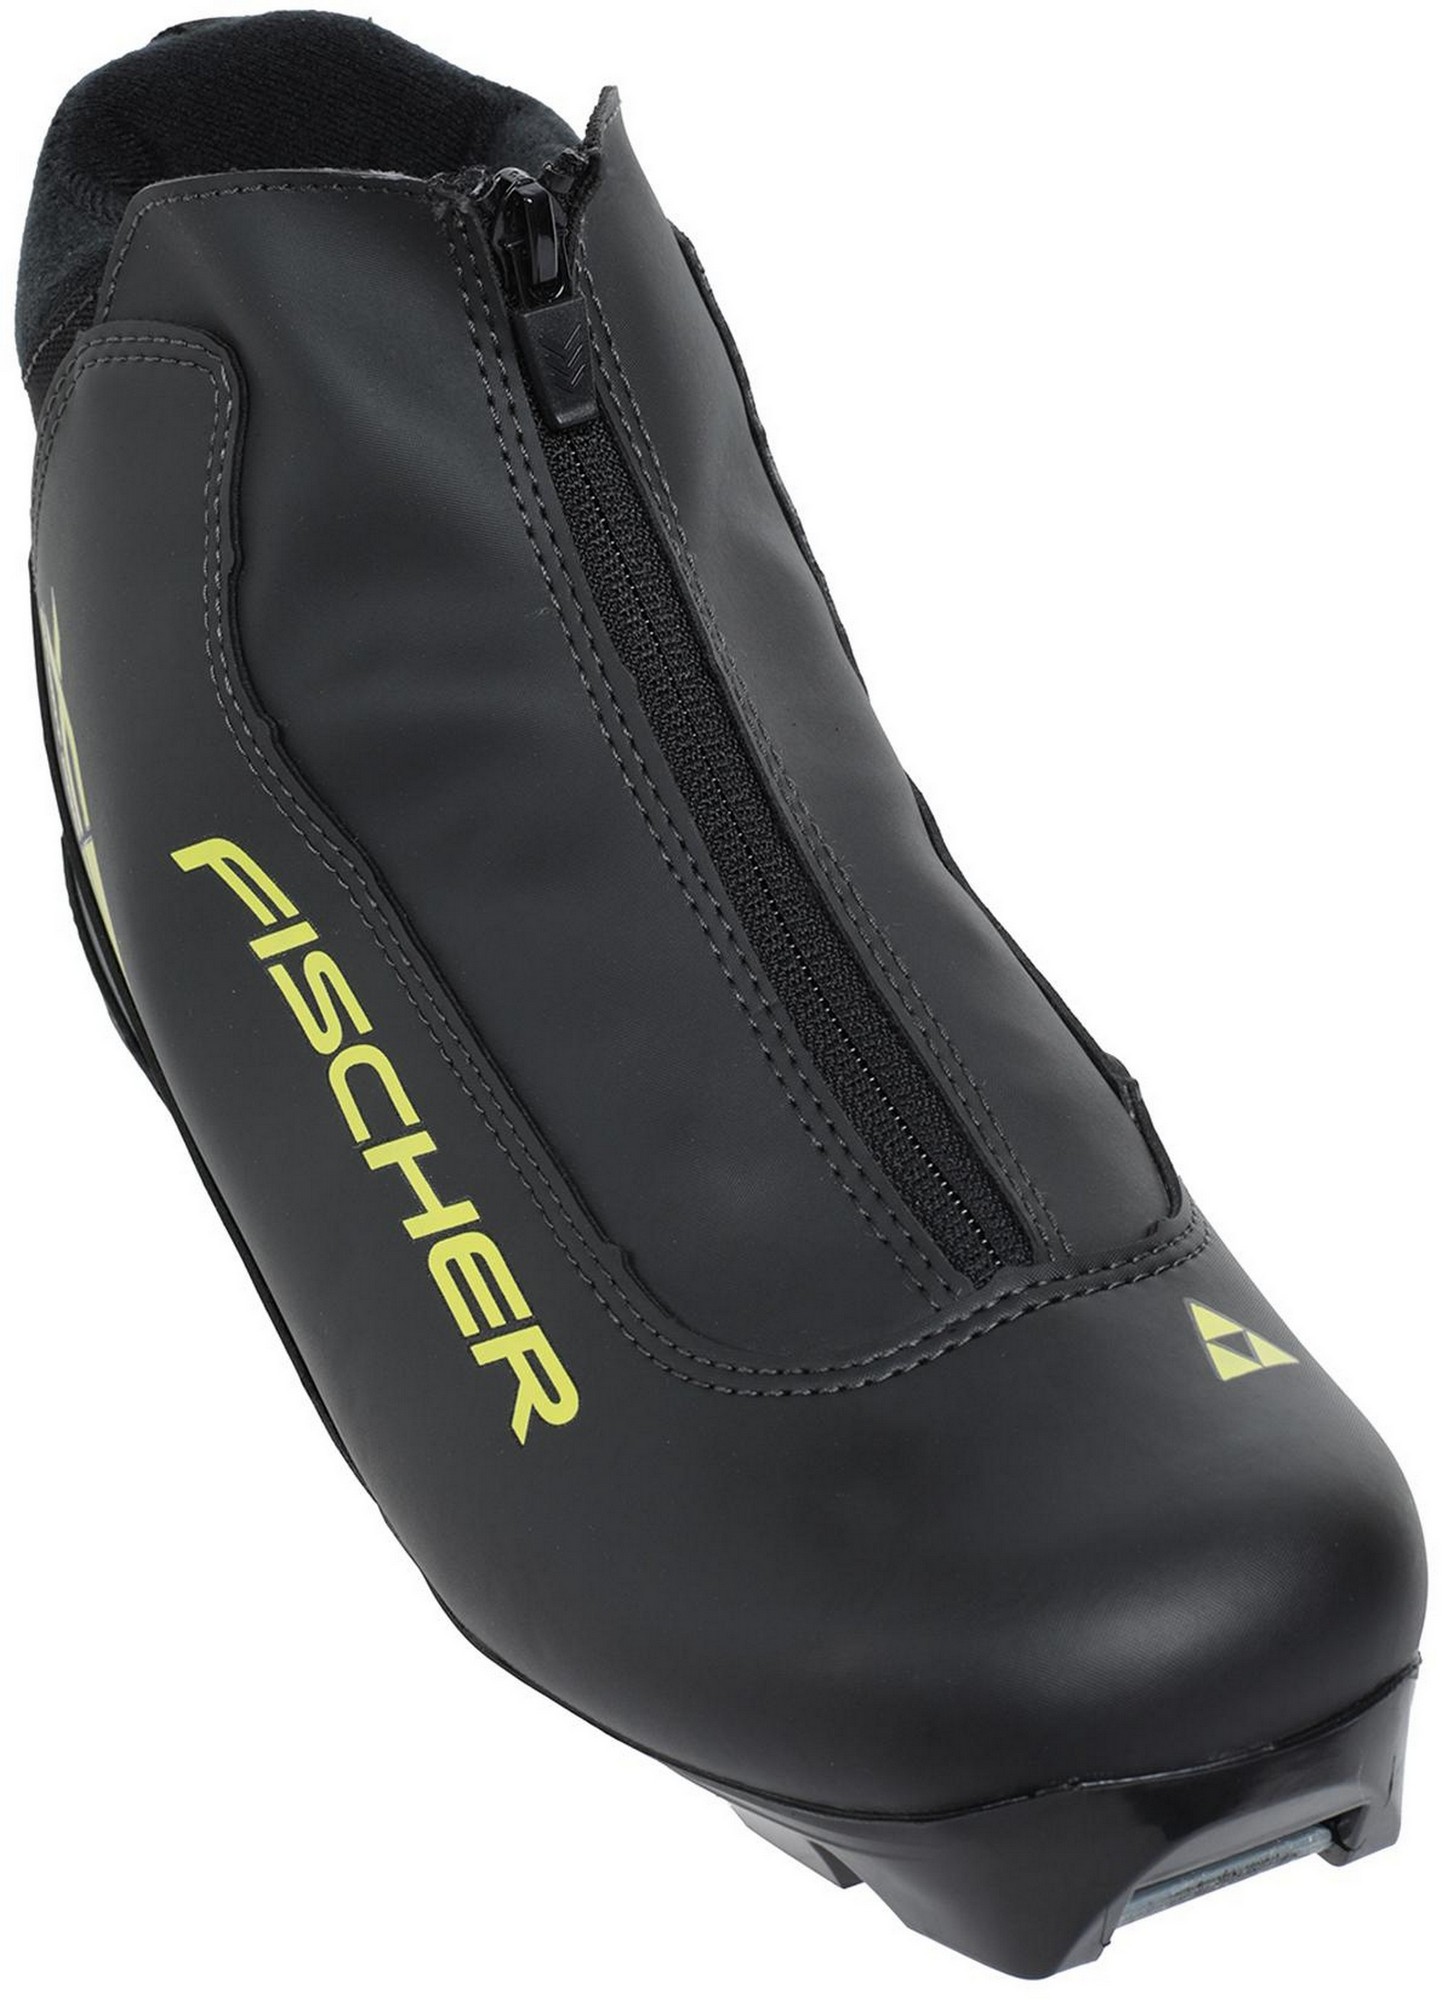 Лыжные ботинки Fischer NNN XC Sport Pro S86122 черный\желтый 1448_2000